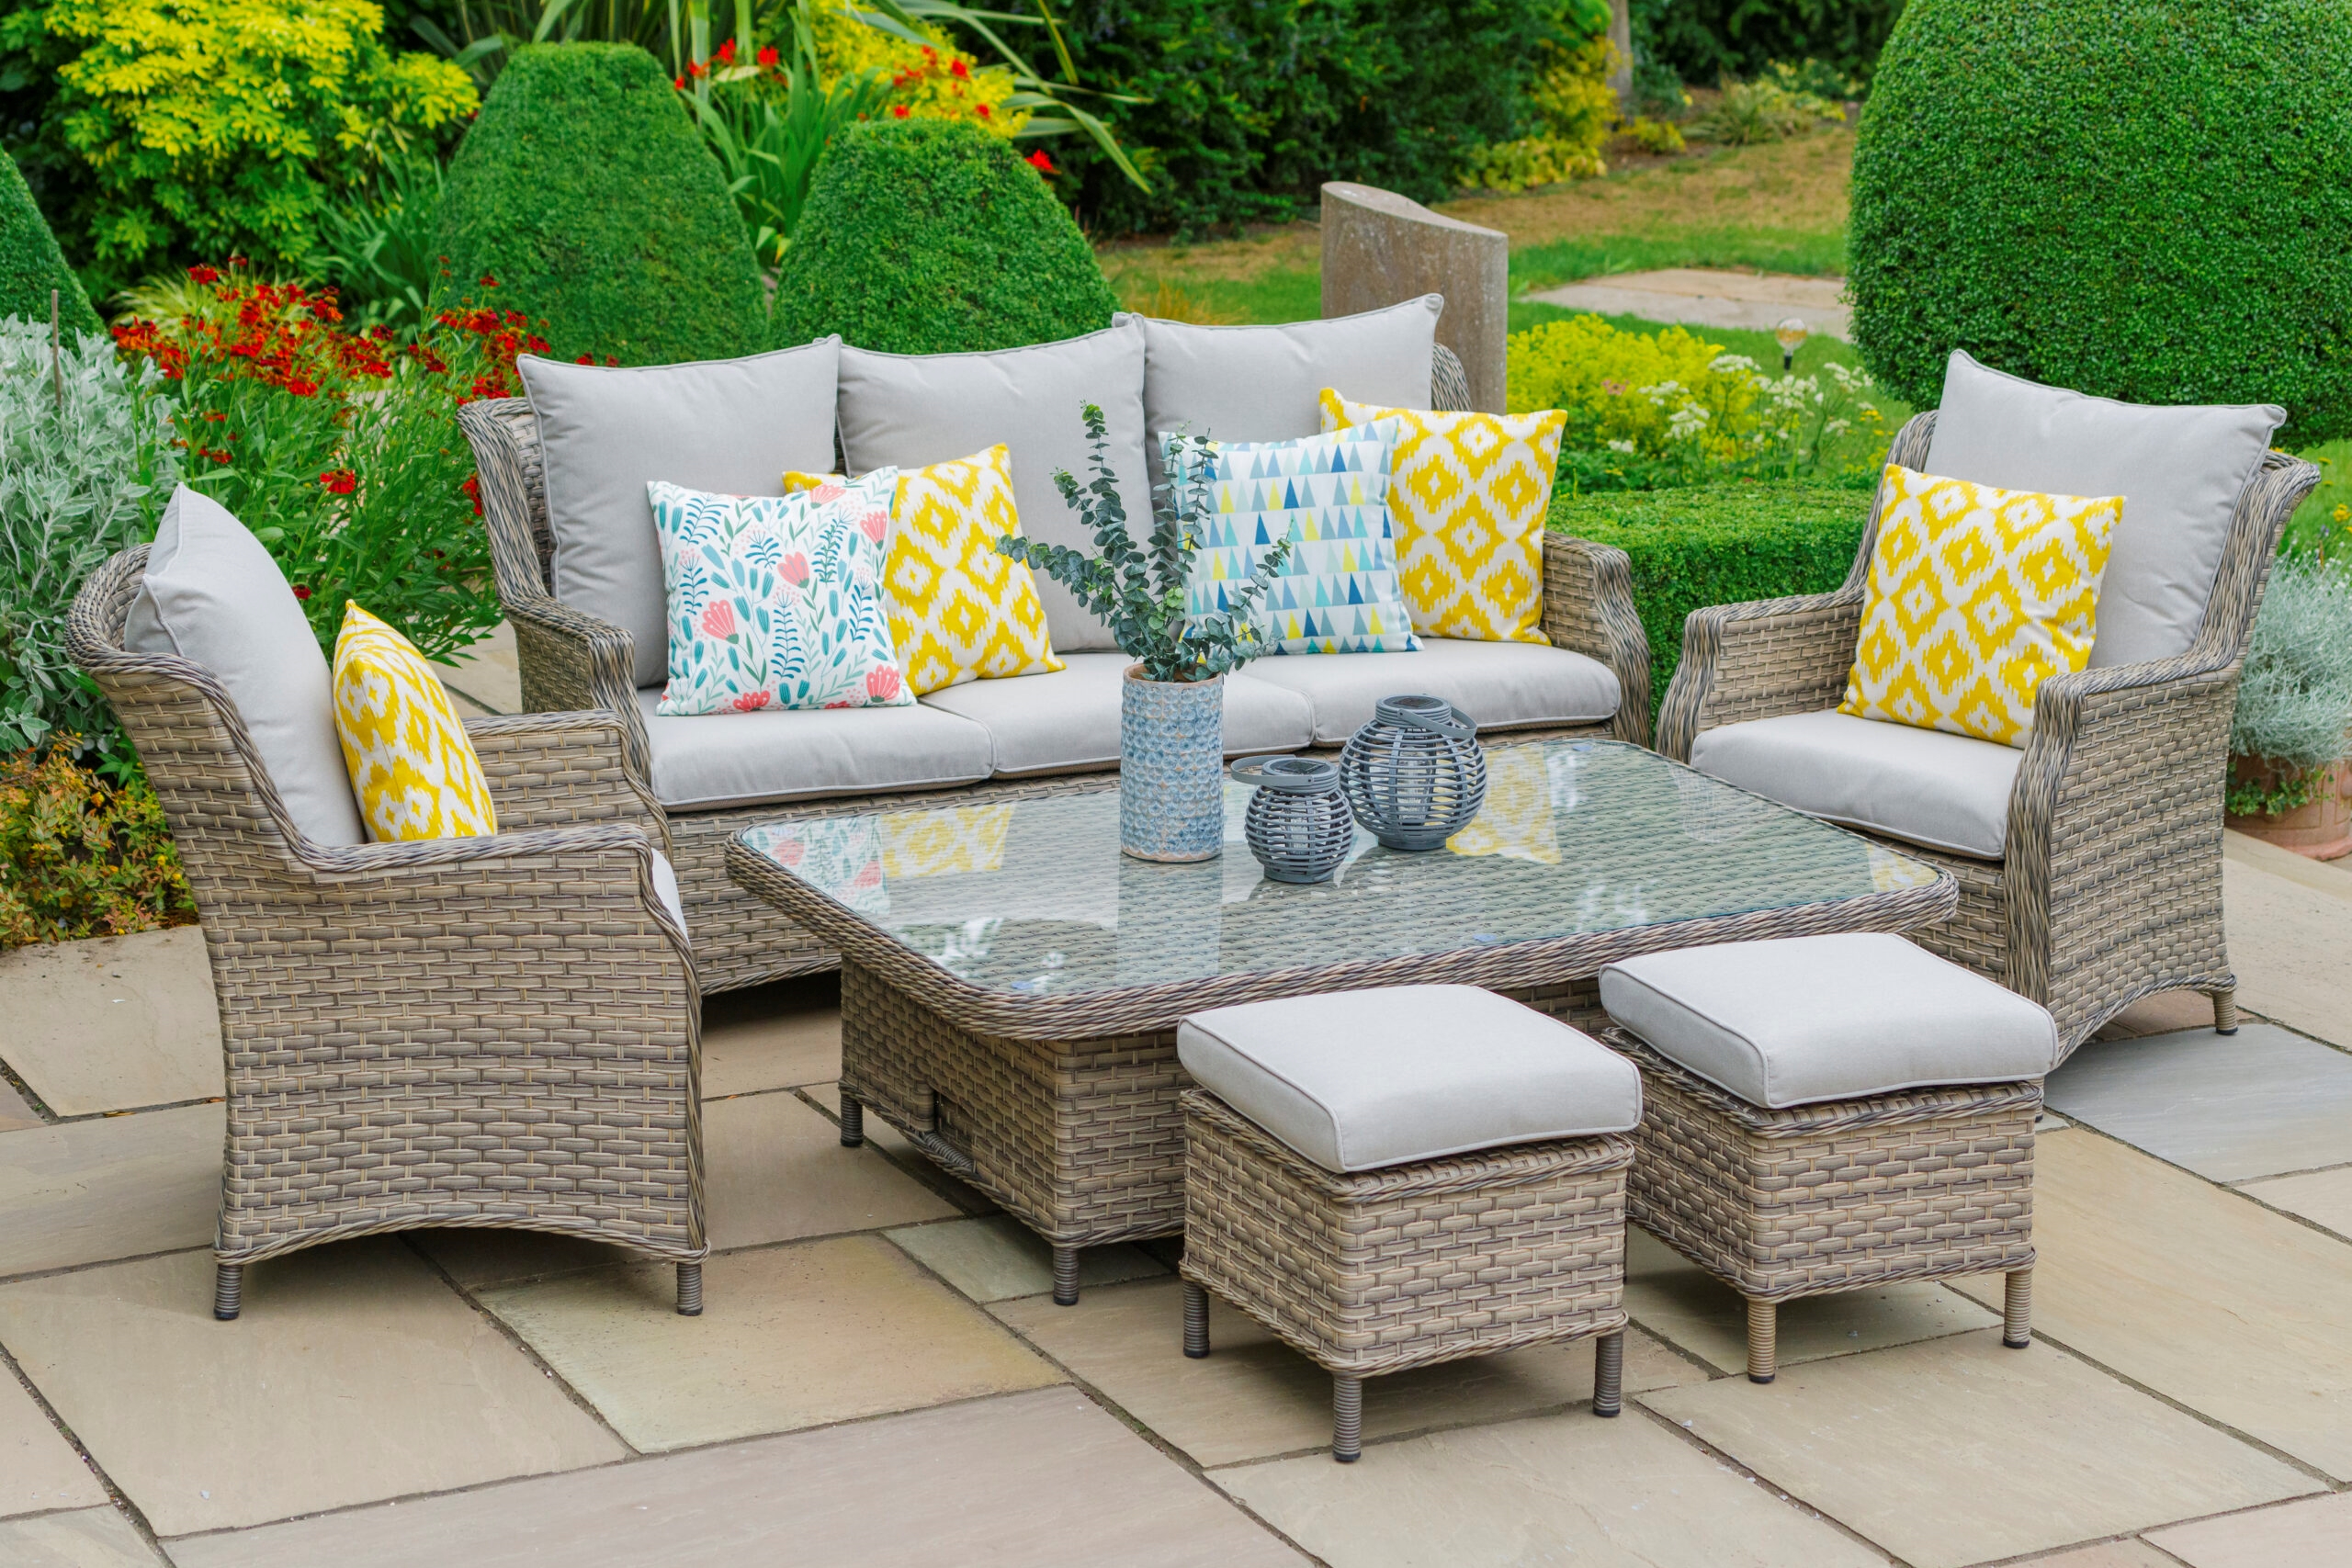 Introducing: LeisureGrow garden furniture